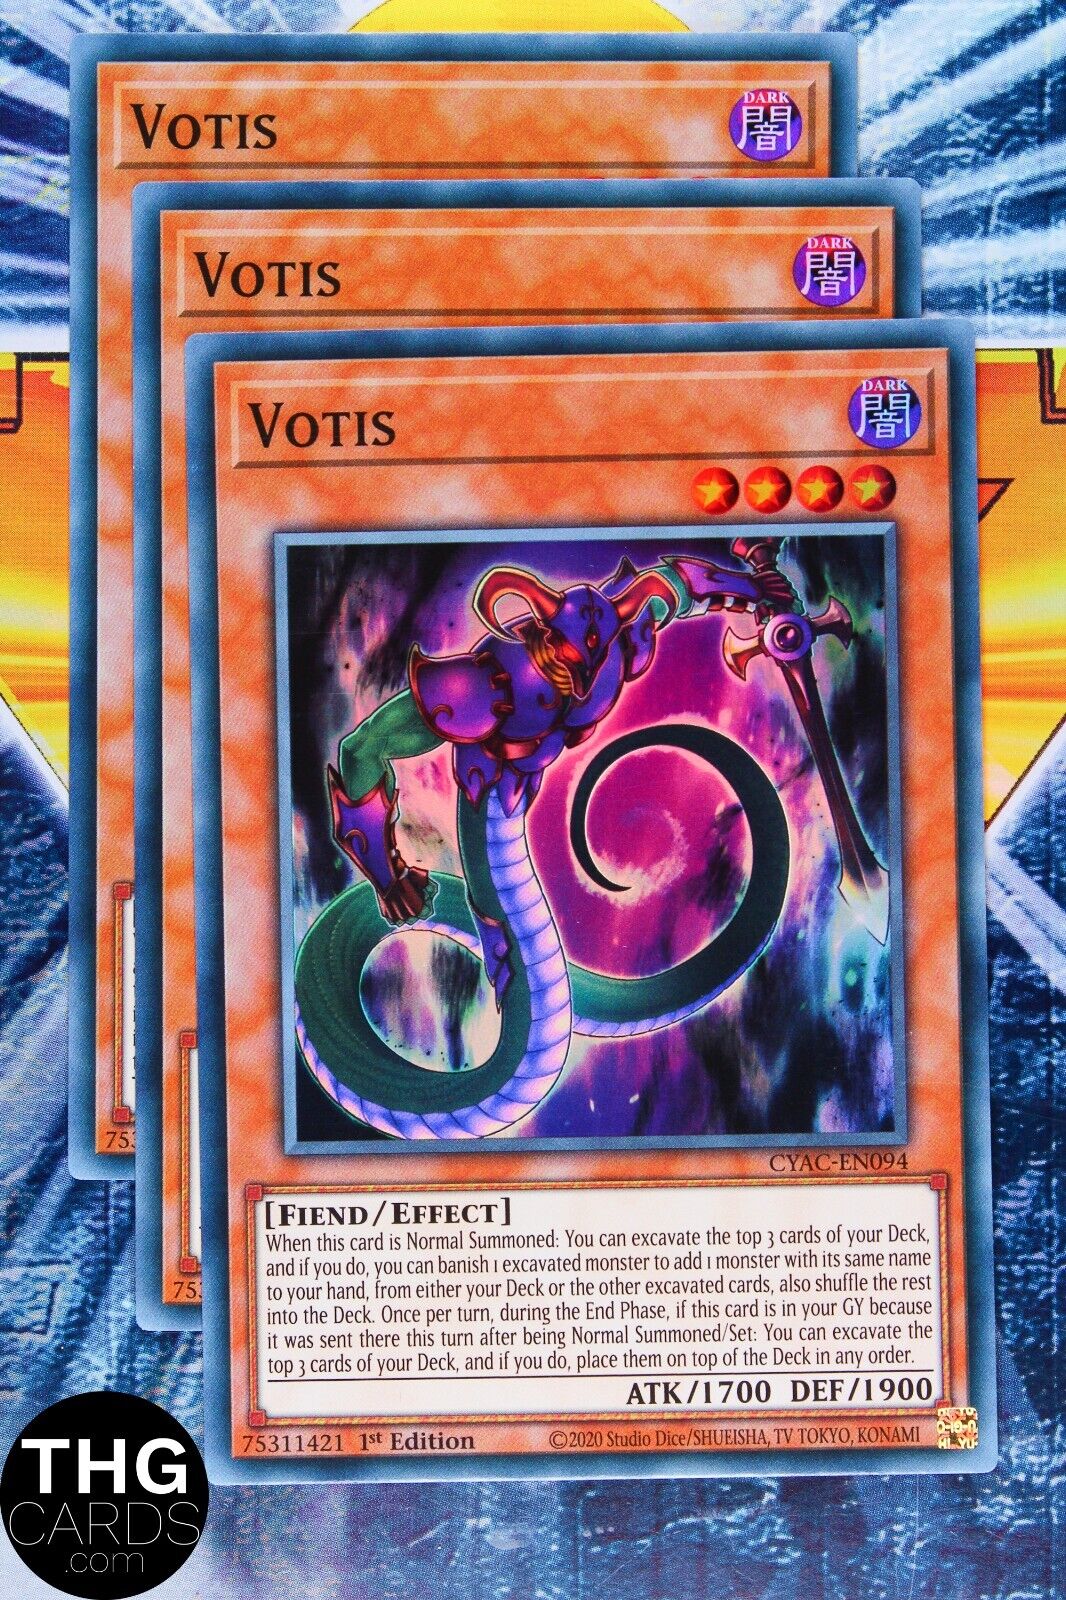 Votis CYAC-EN094 1st Edition Super Rare Yugioh Card Playset